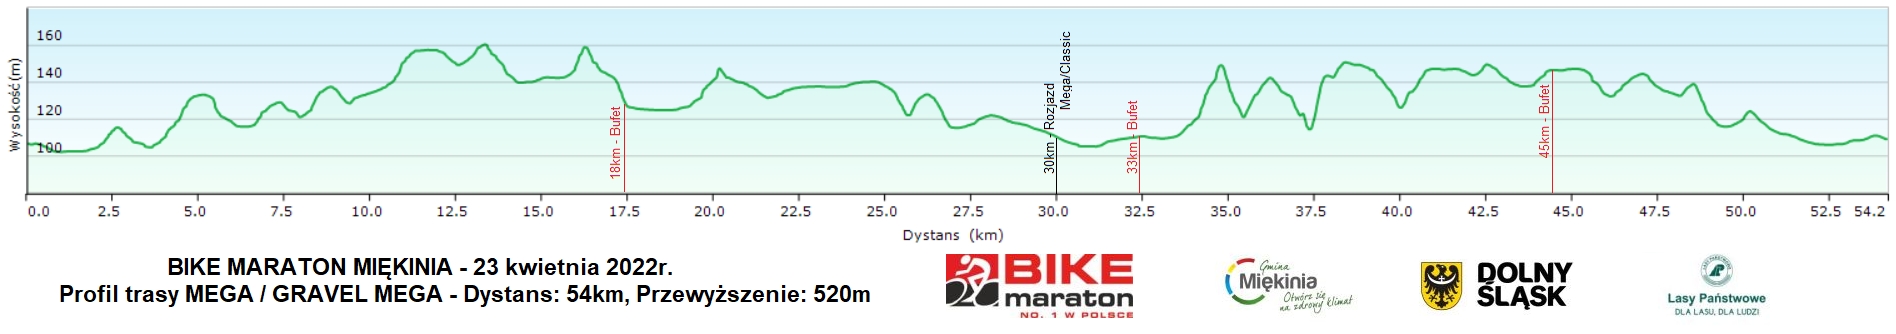 bike-maraton-2022-miekinia-profil-trasy-mega-gravel